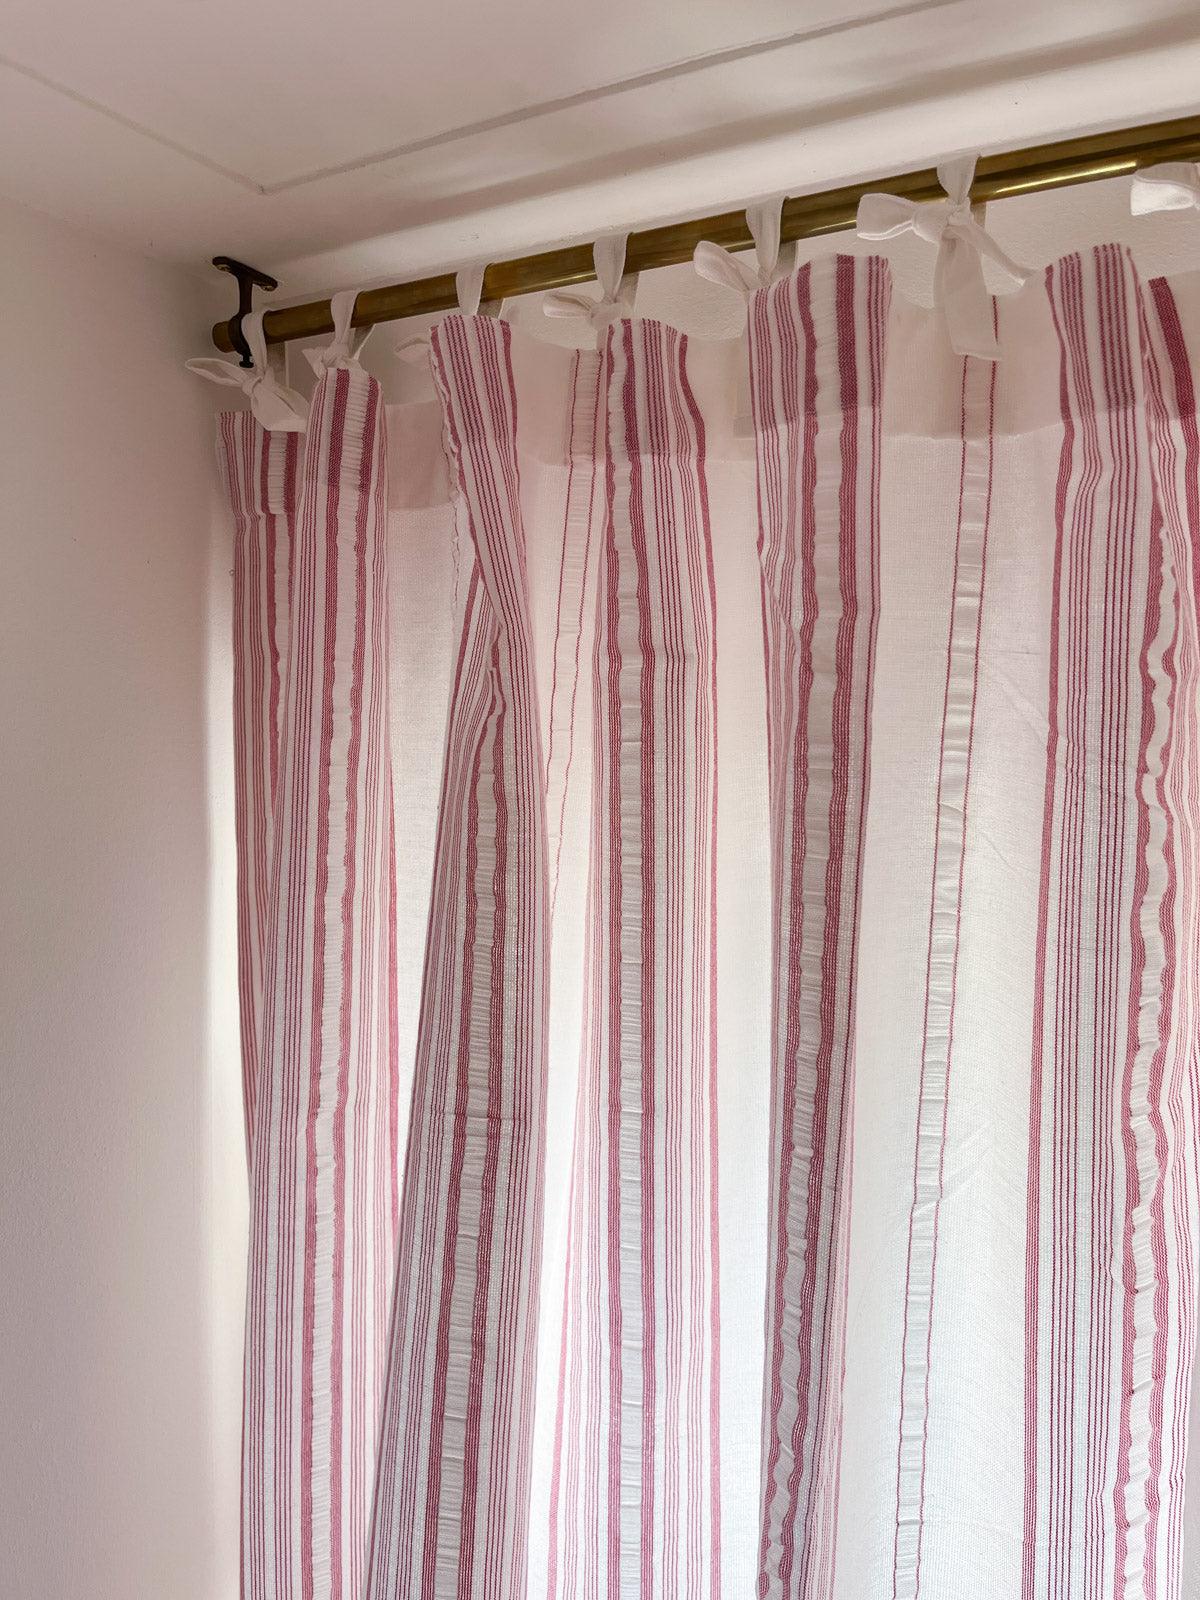 Striped curtain